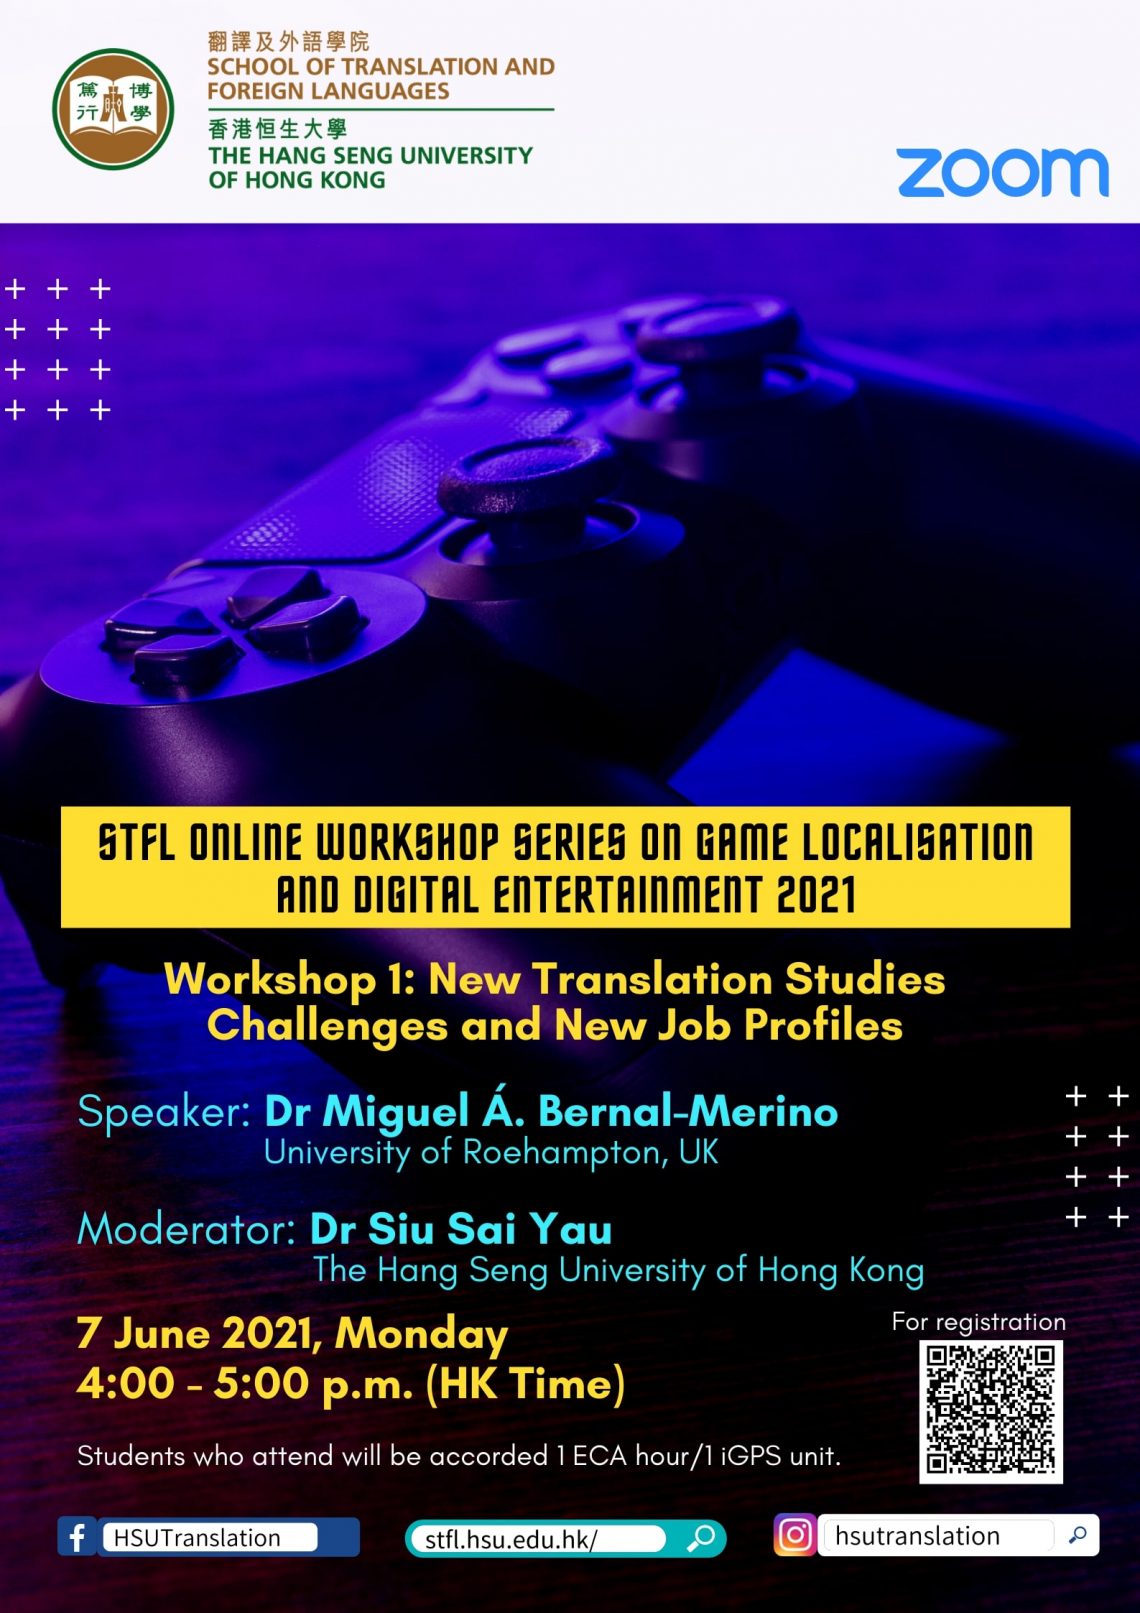 [STFL Online workshop series on game localisation and digital entertainment 2021] Workshop 1: Game Localisation: New Translation Studies Challenges and New Job Profiles_generic